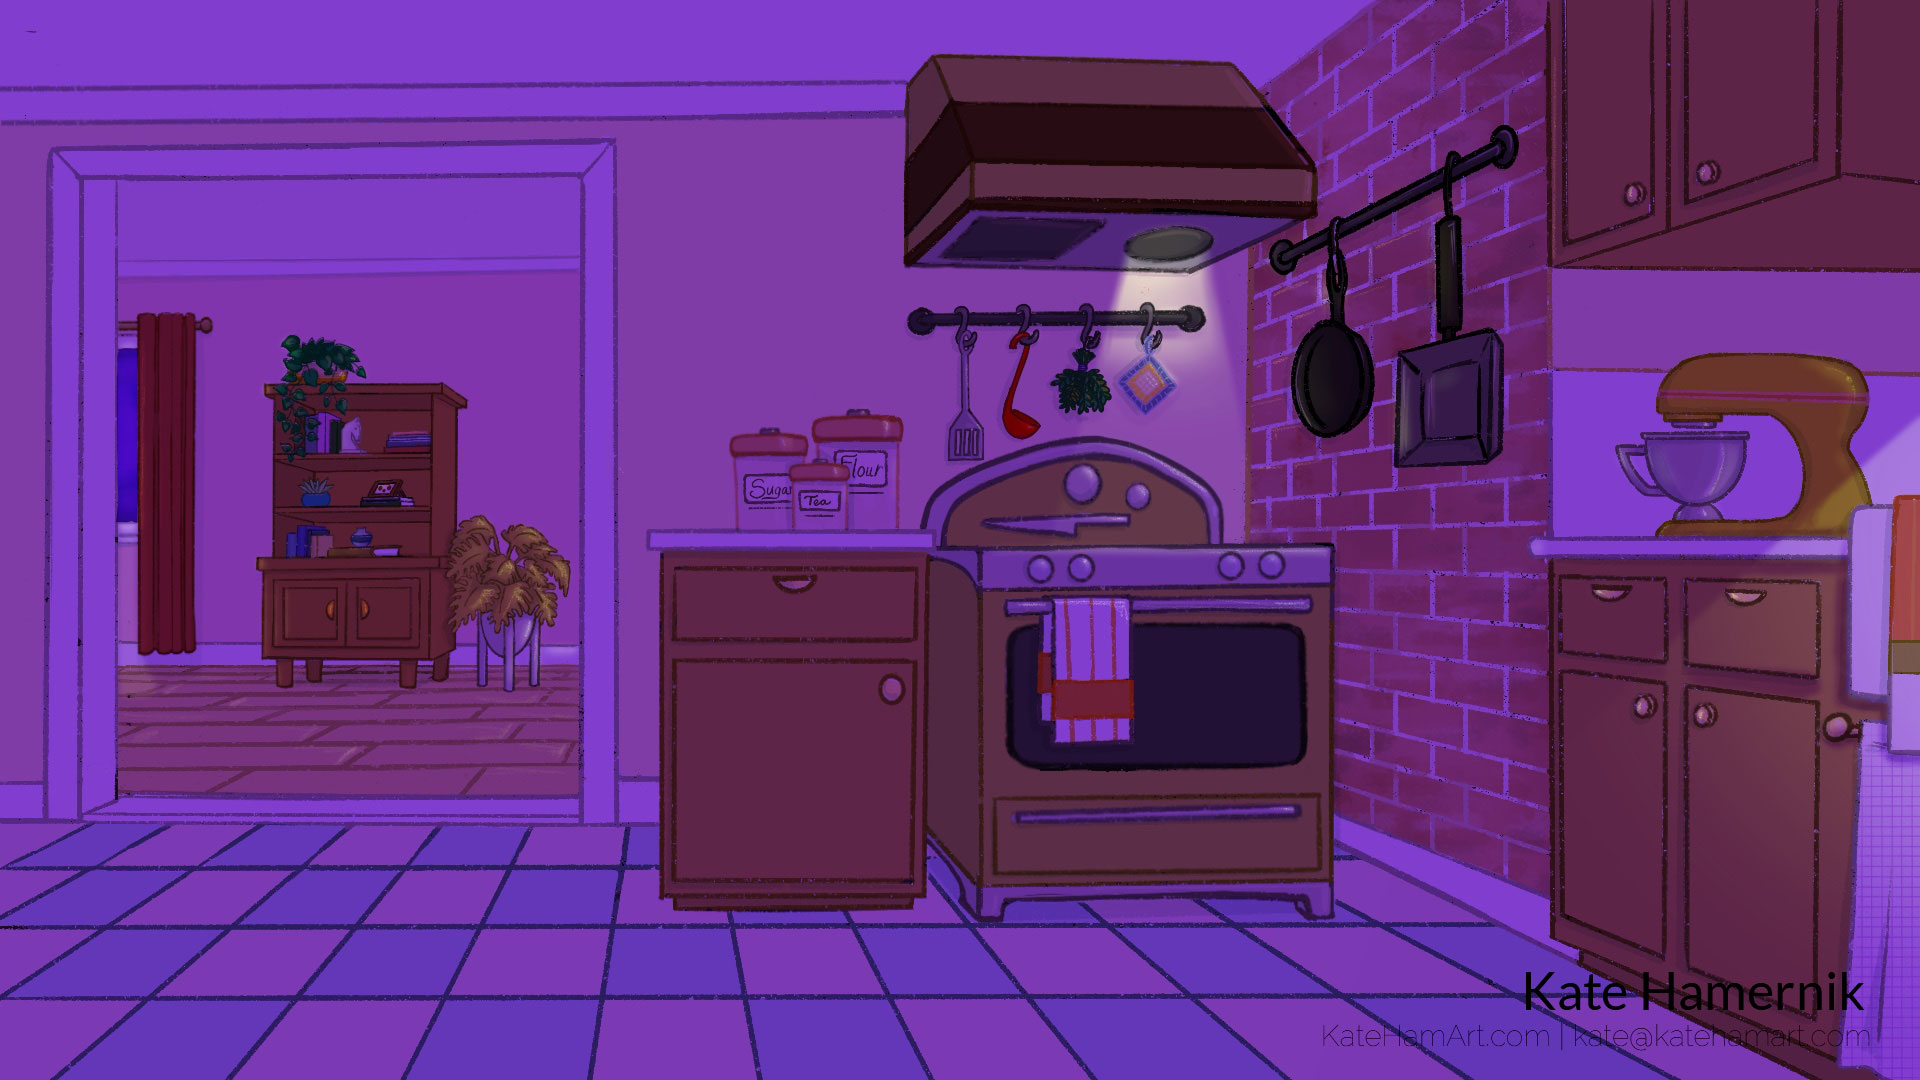 background design kitchen oven wall-night